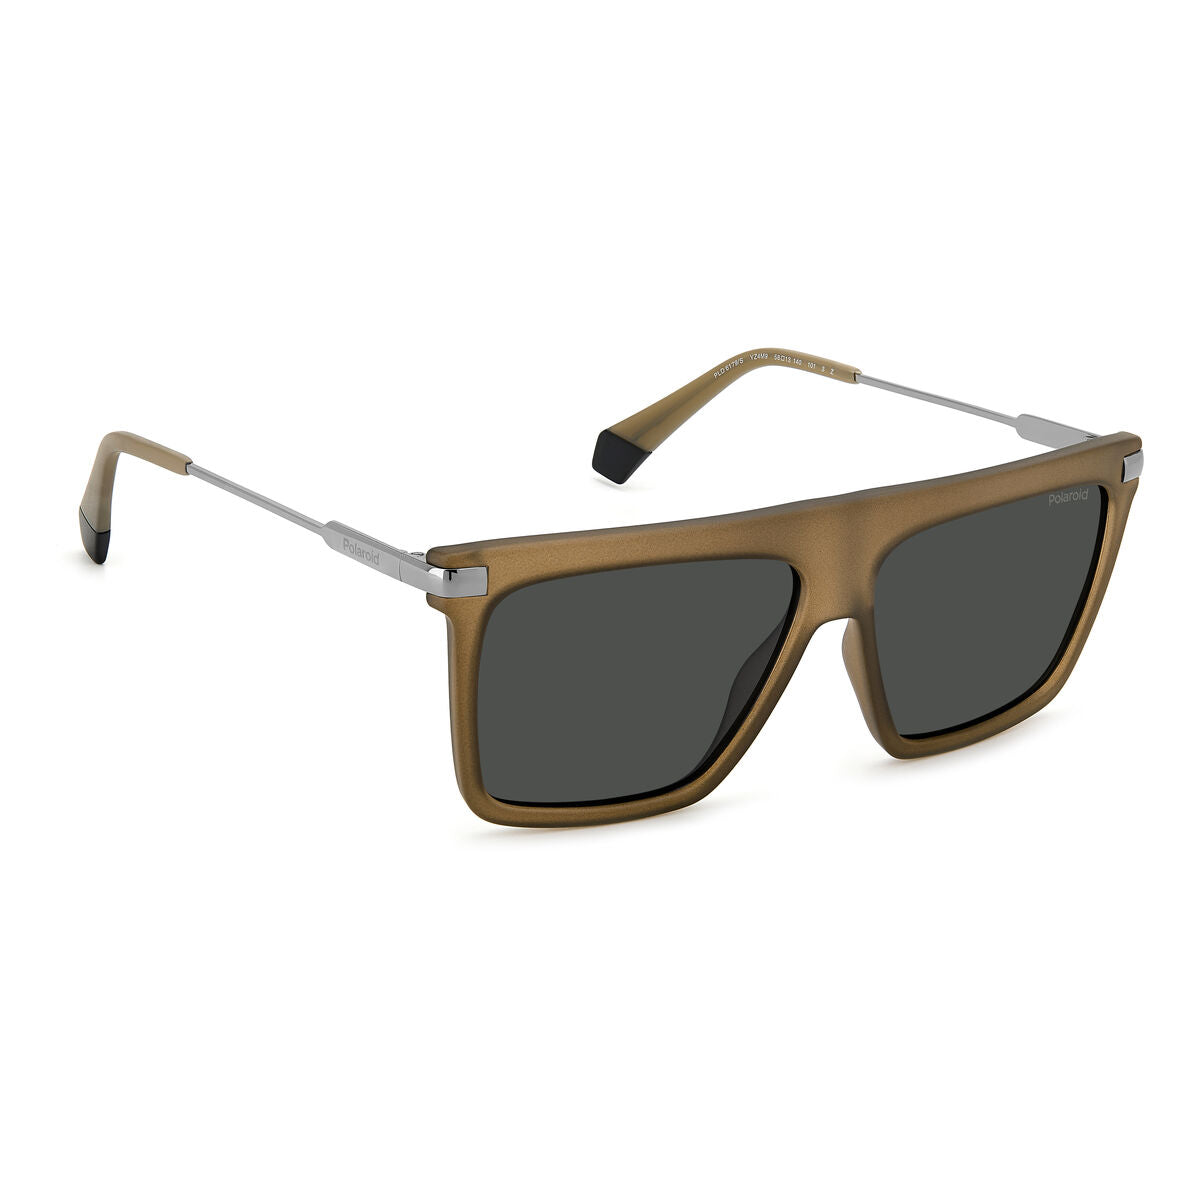 Men's Sunglasses Polaroid PLD-6179-S-YZ4-M9